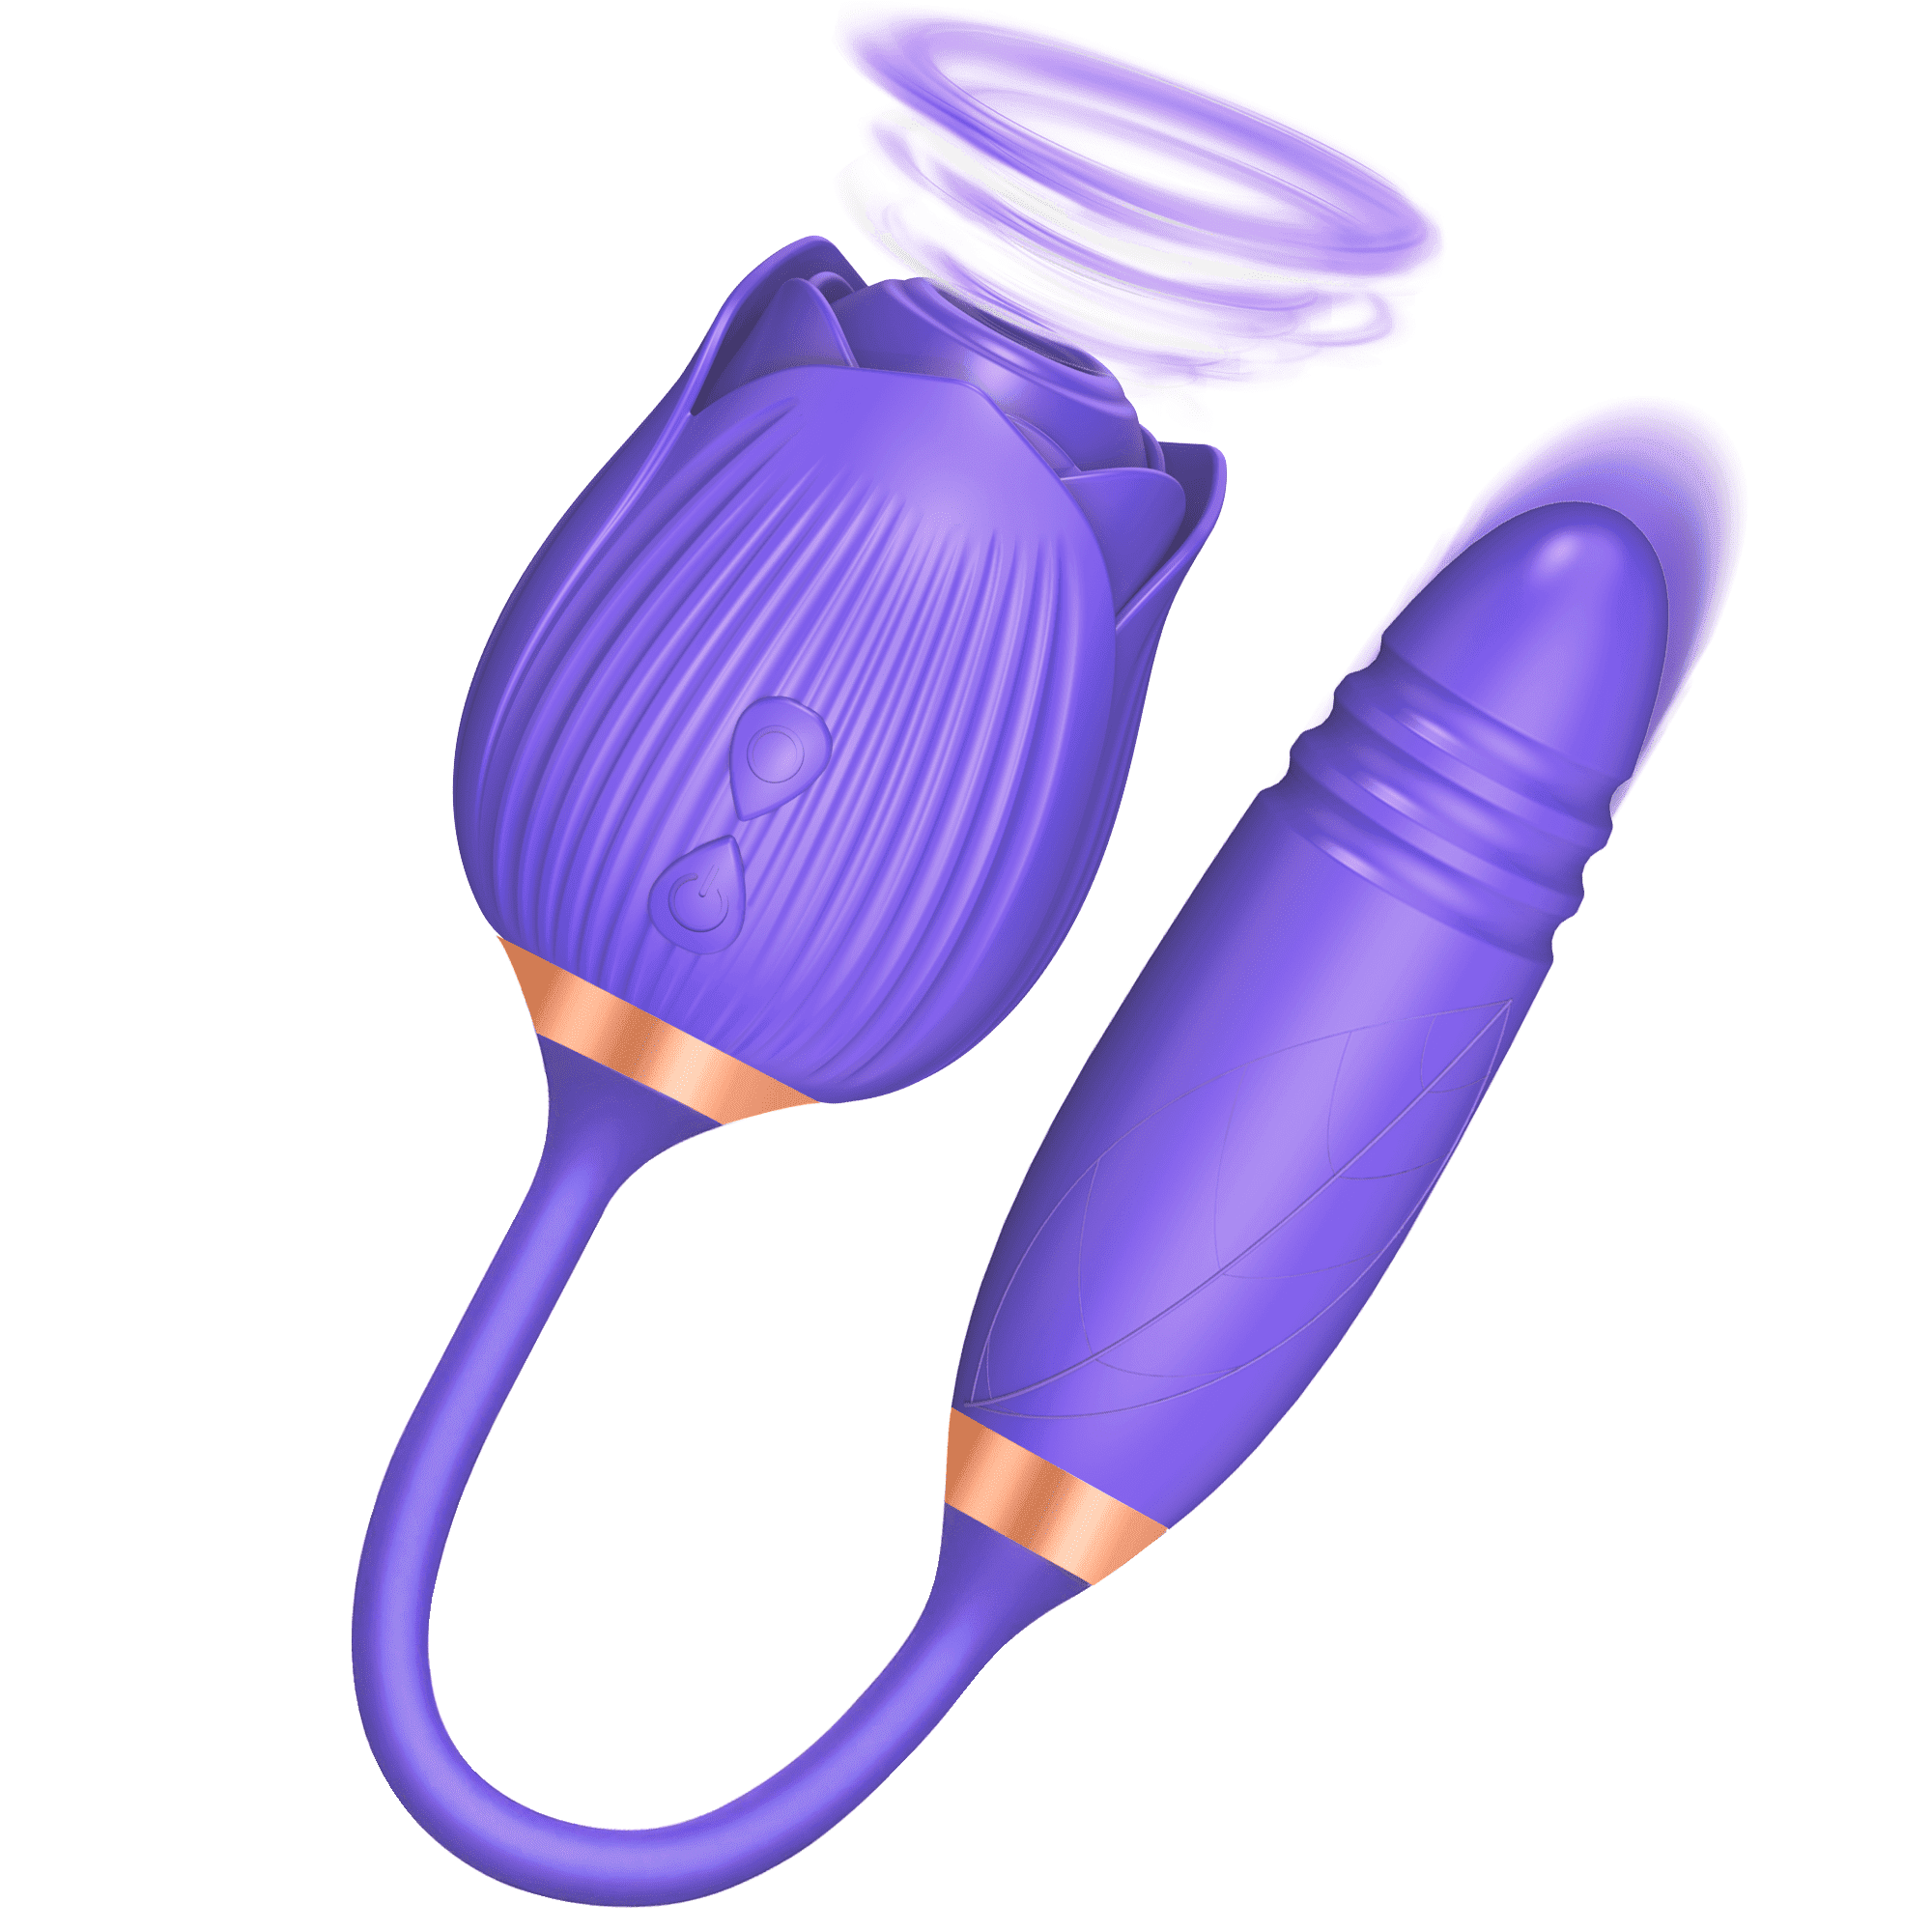 DARZU Vibrators and Adult Sex Toys for Women, Rose Toys Clitoral Stimulator with Dildo Vibrating Egg, Blue Purple